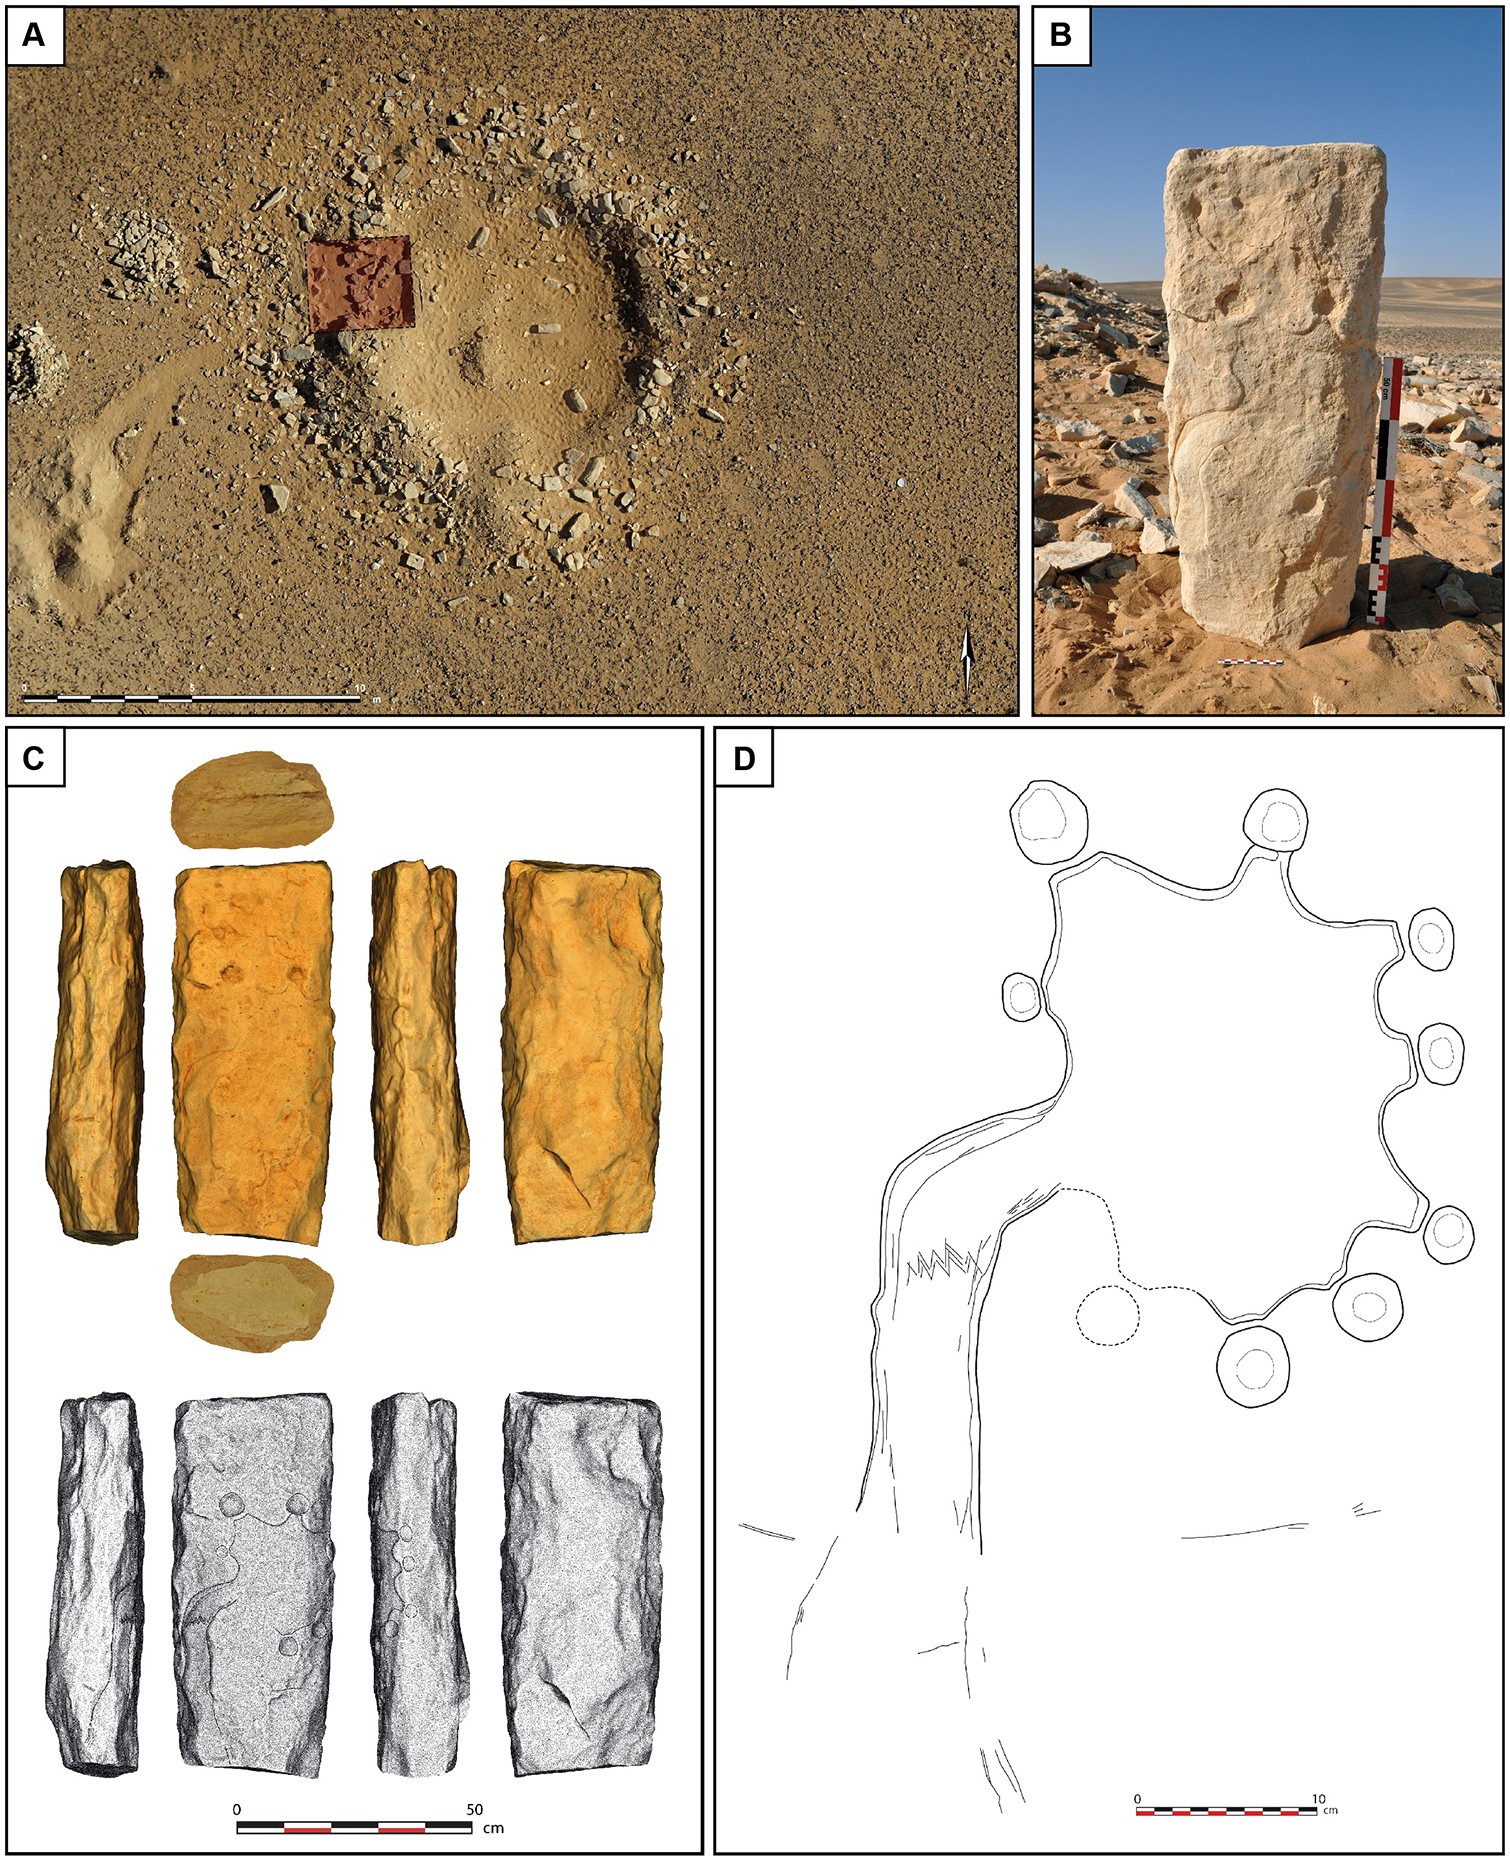 Descoberta da pedra gravada em Jibal al-Khashabiyeh, Jordânia — Foto: Rémy Crassard et.al 